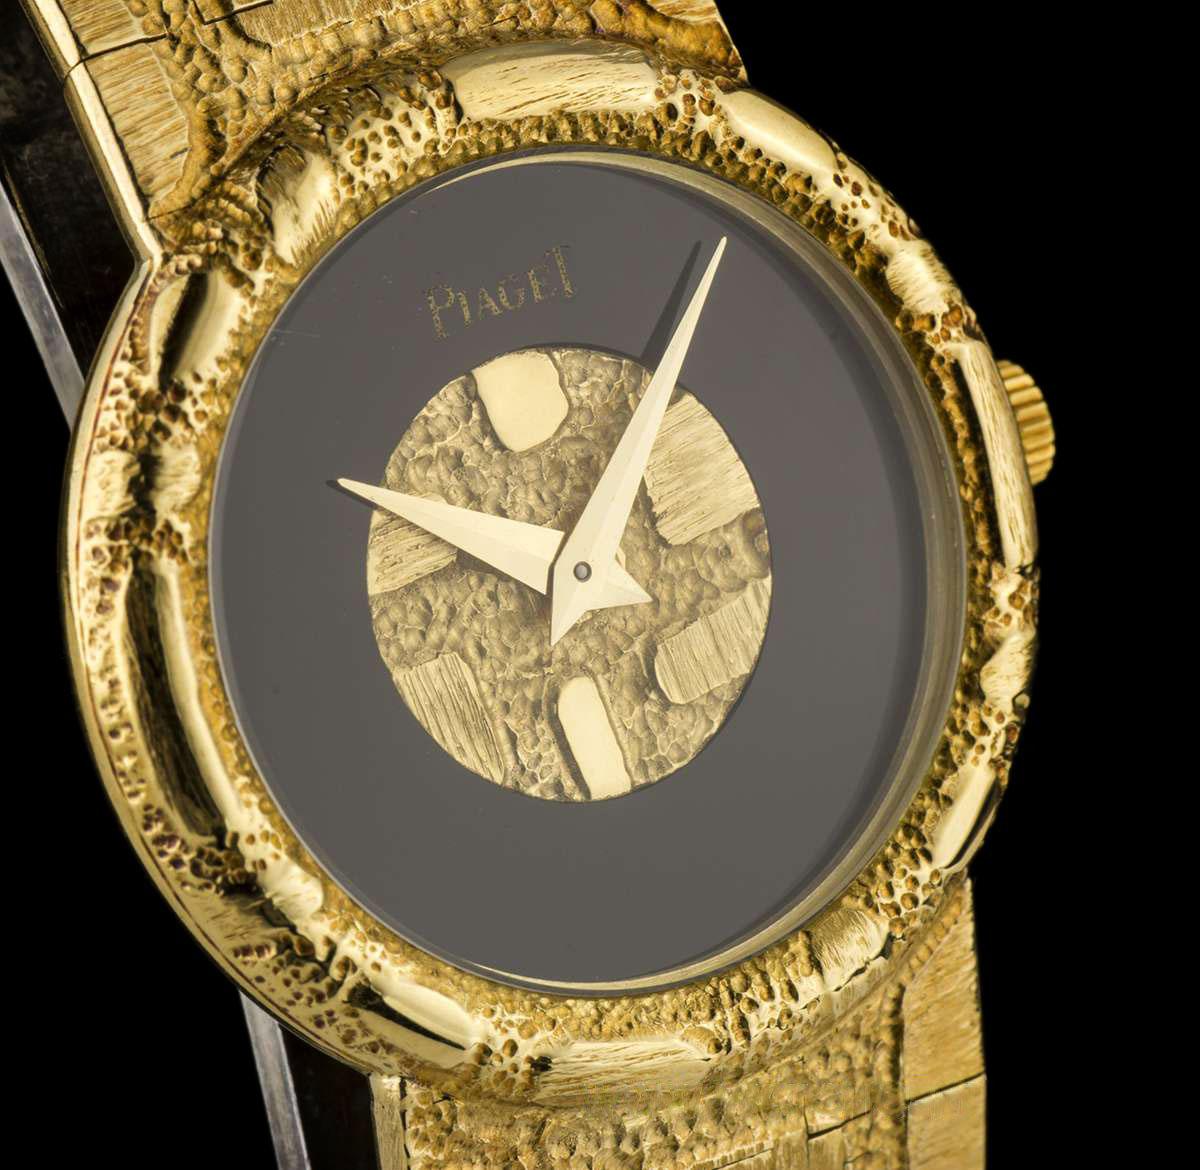 Mixed Cut Piaget 18 Karat Yellow Gold Onyx Dial Ladies Dress Watch 9040 A80